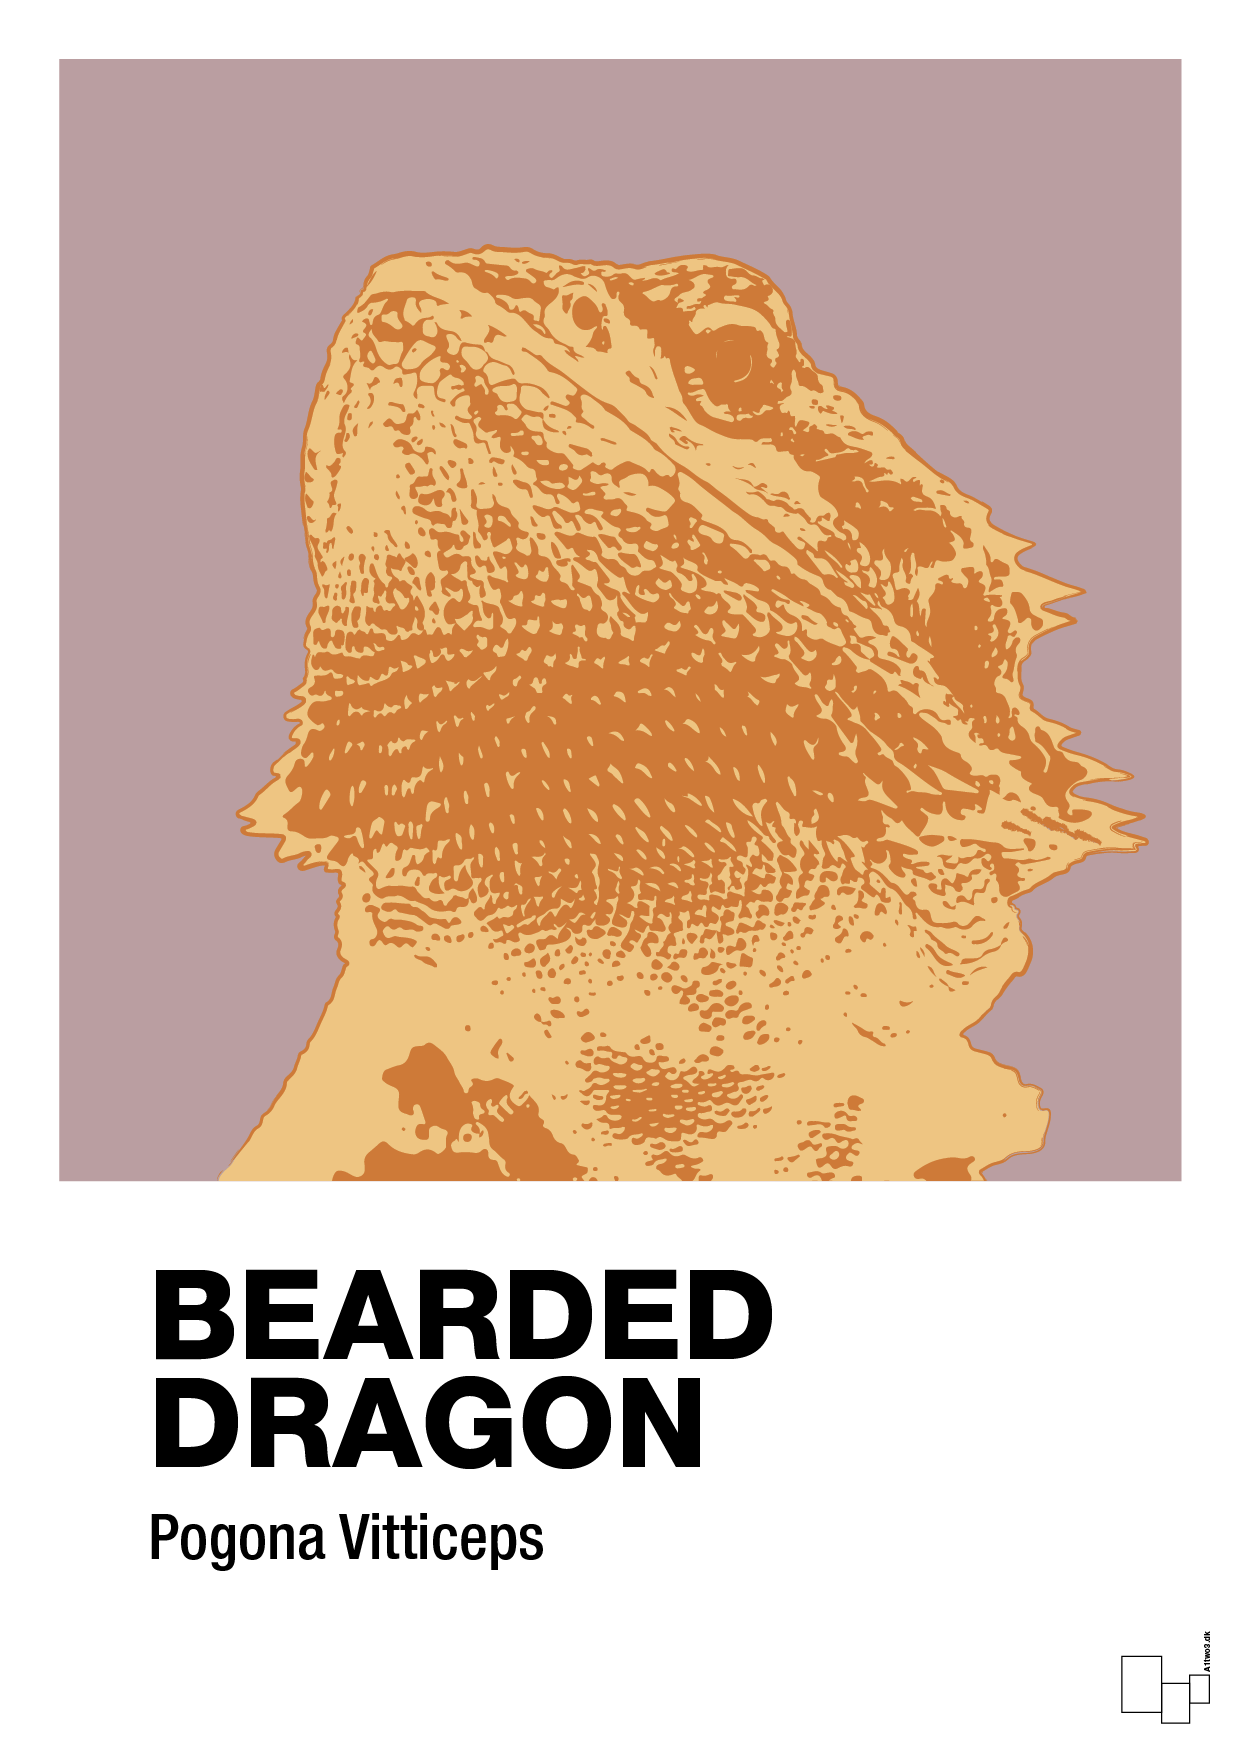 bearded dragon - Plakat med Videnskab i Light Rose